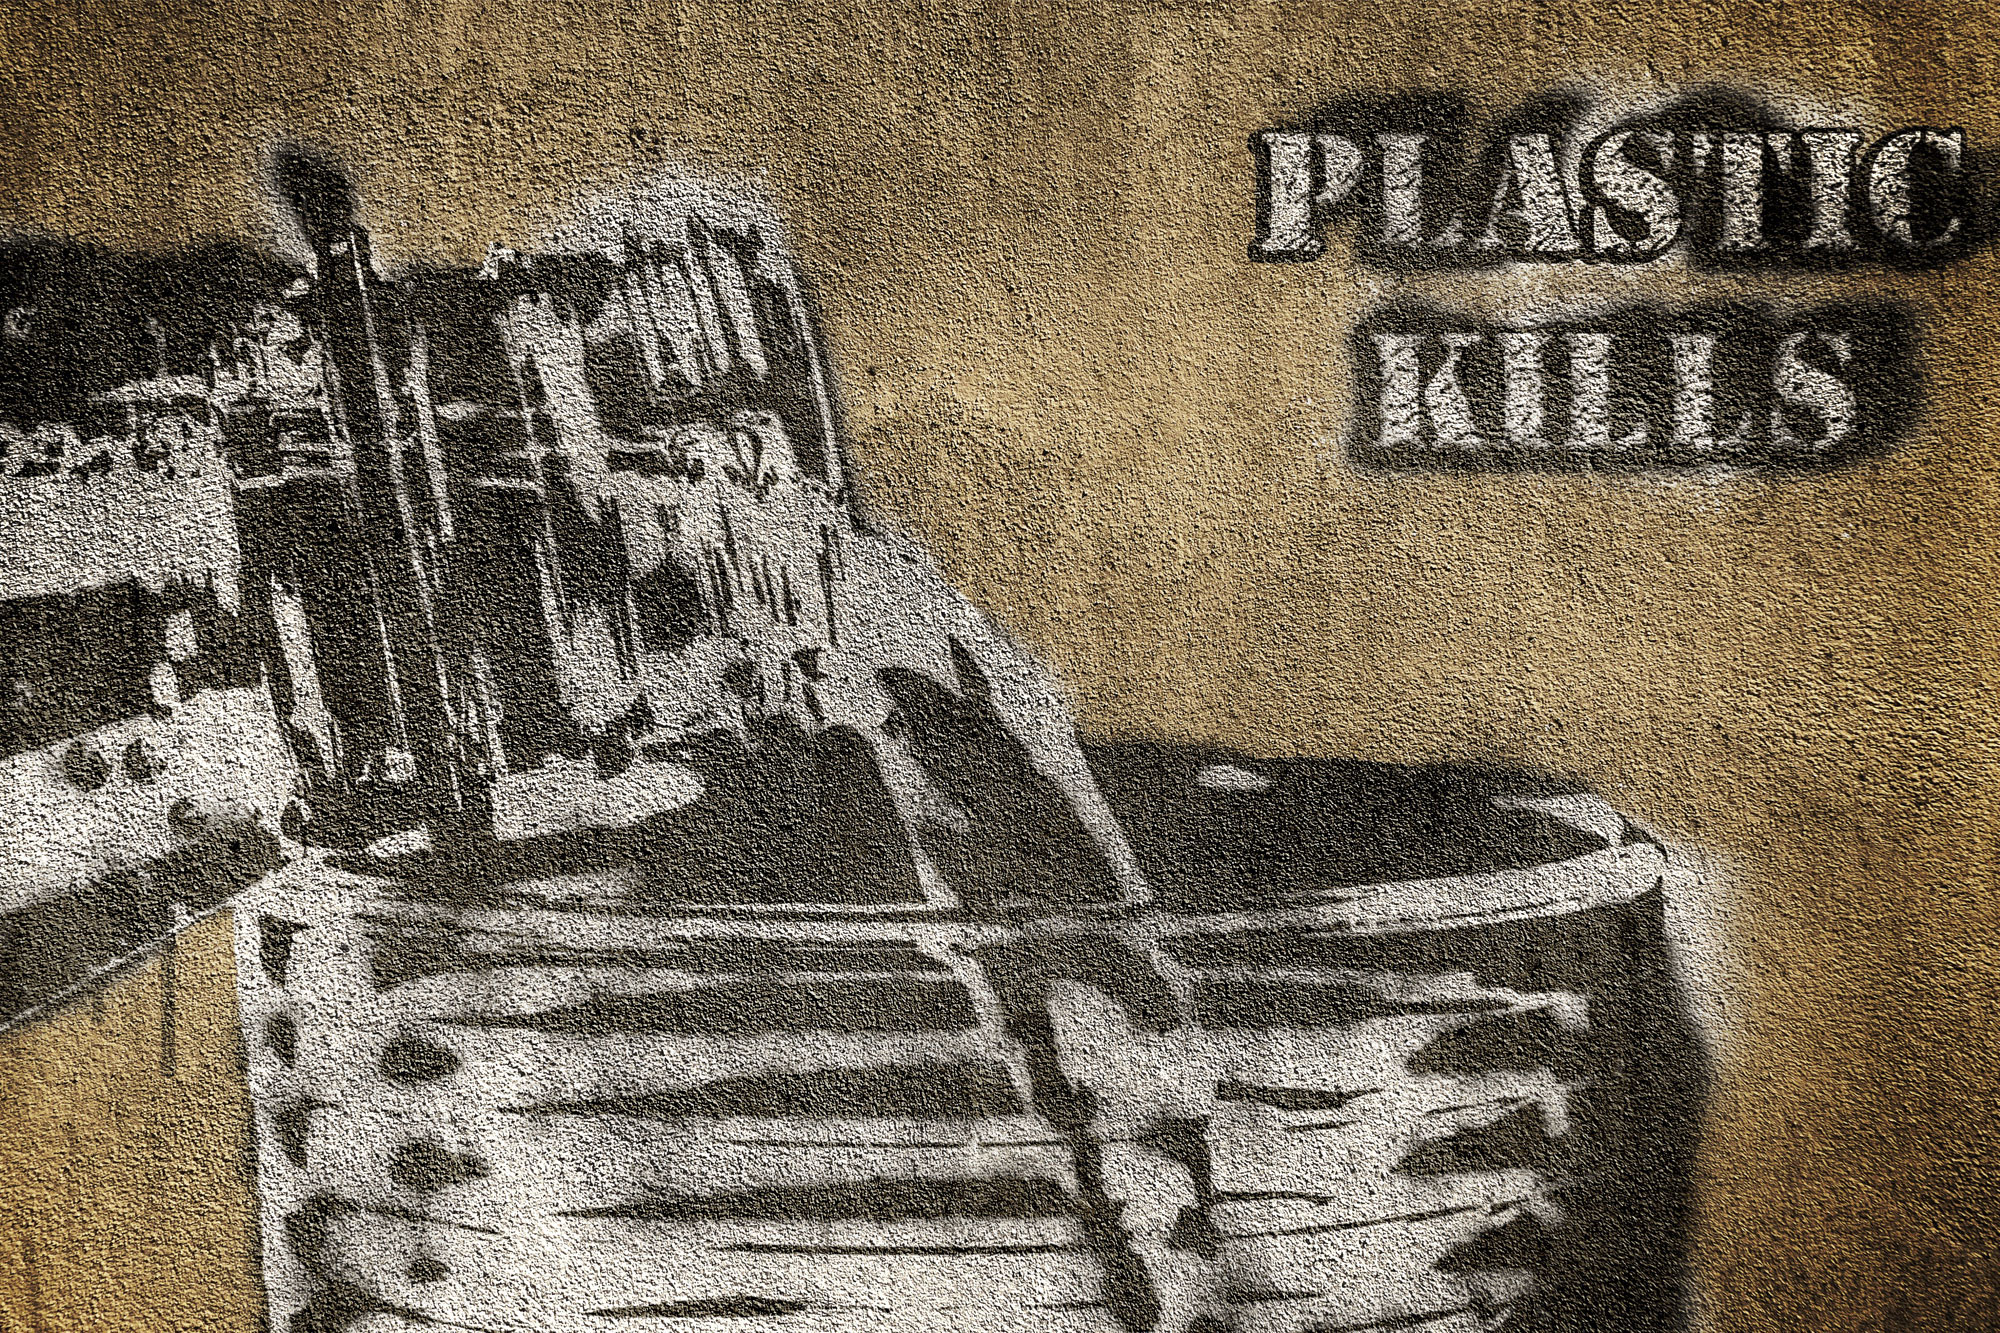 Stencilled graffiti with the slogan 'Plastic Kills'